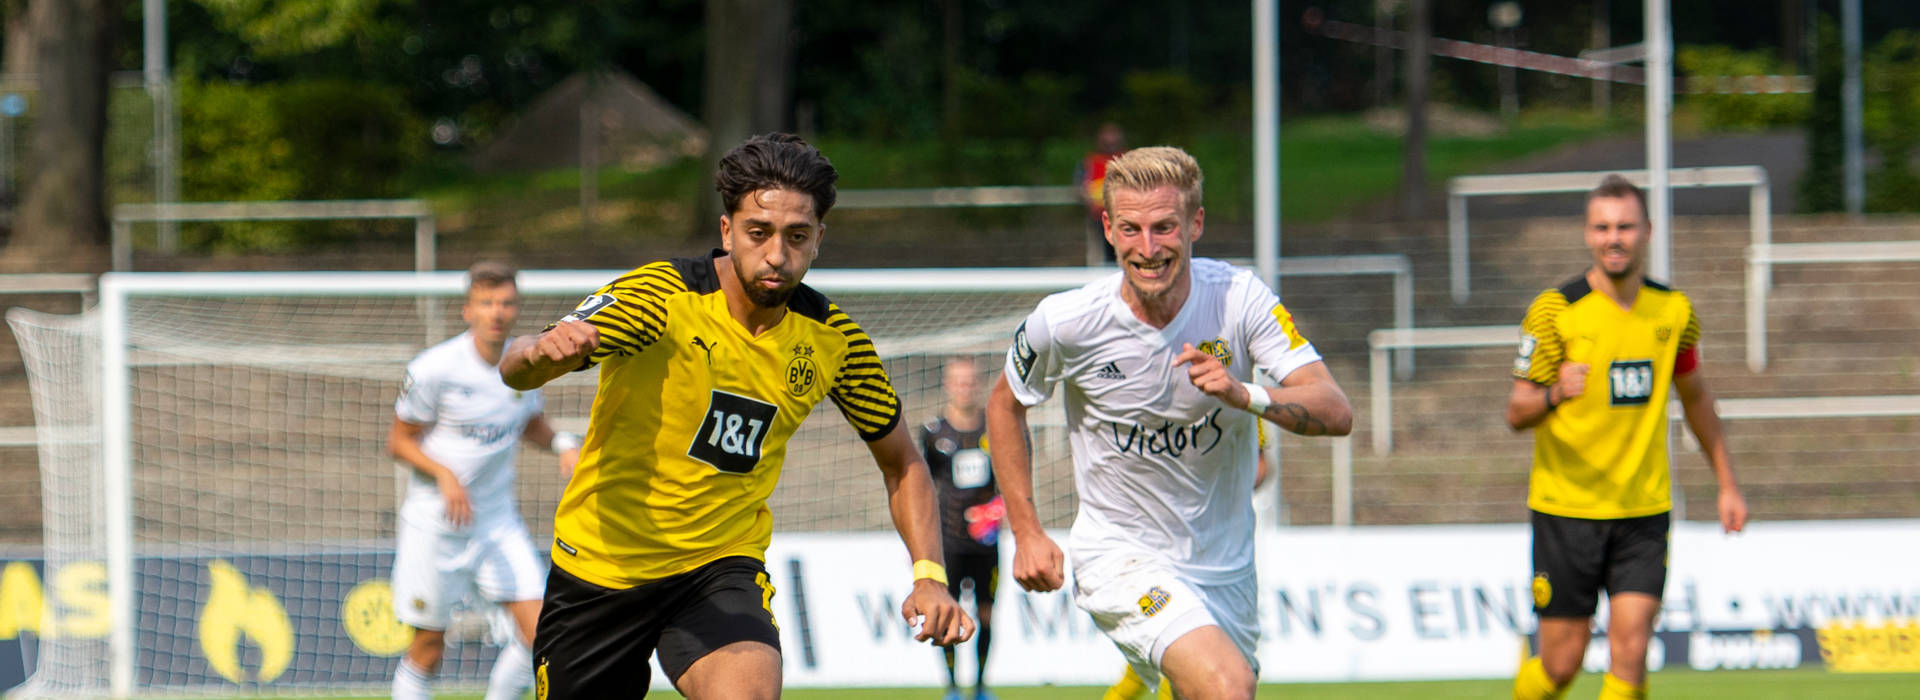 English week sees U23s visit Saarbrücken on Wednesday evening